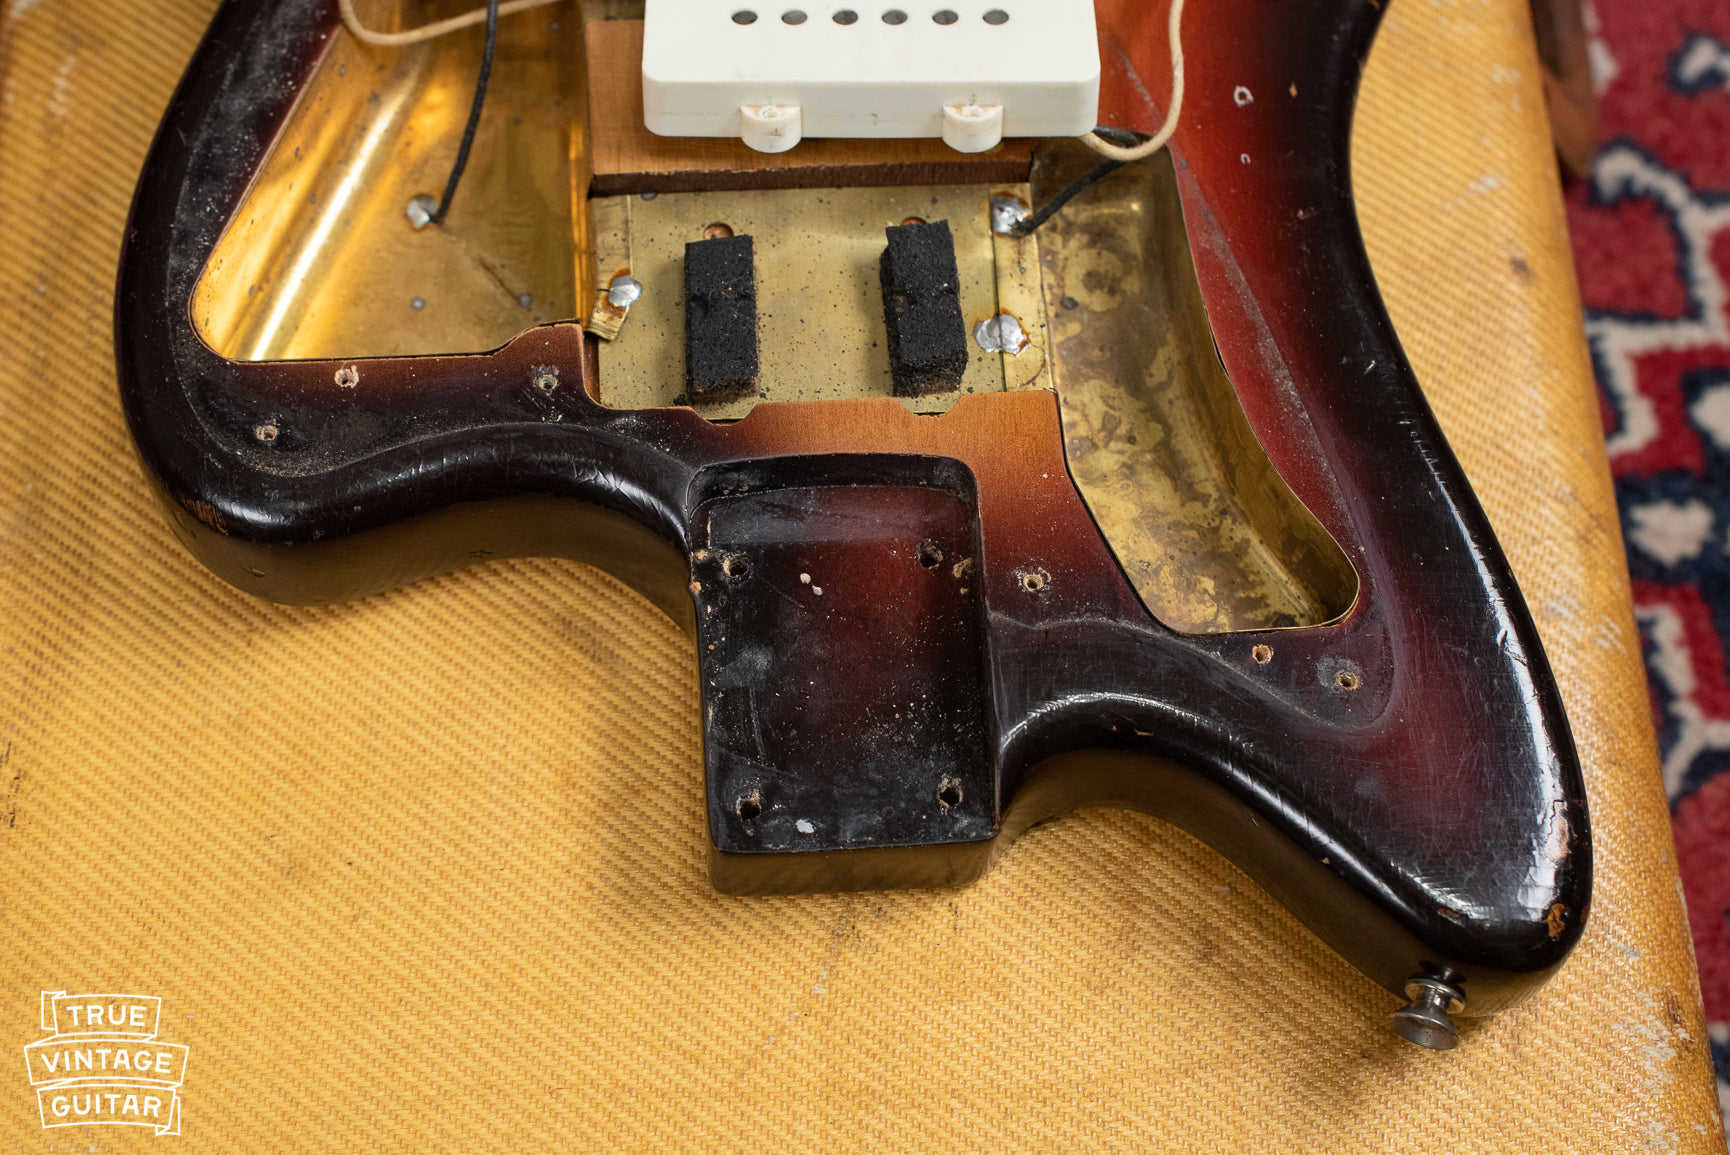 1958 Fender Jazzmaster neck pocket, nail holes